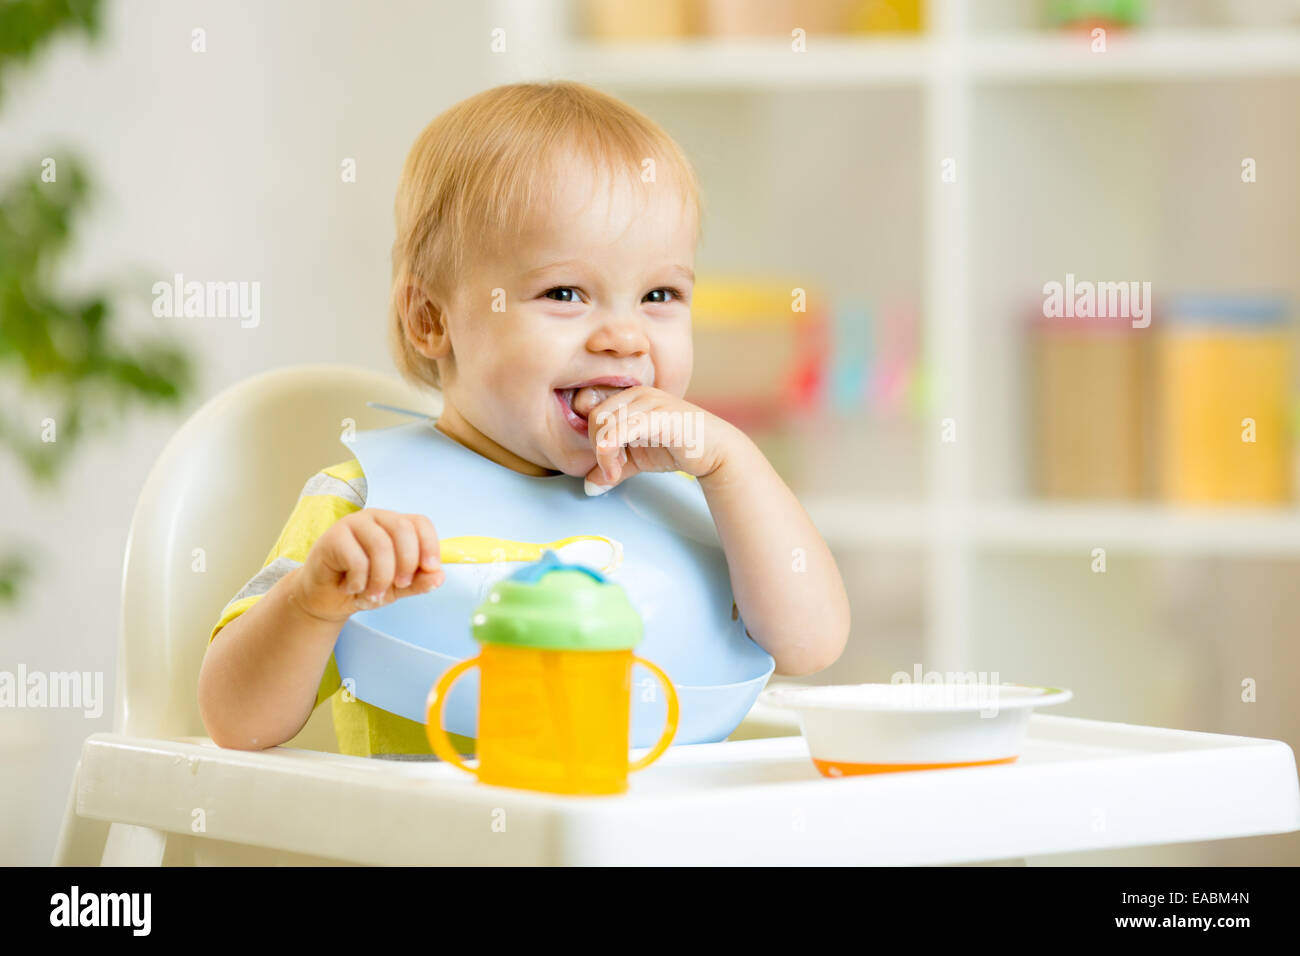 happy baby kid boy eating itself with spoon Stock Photo